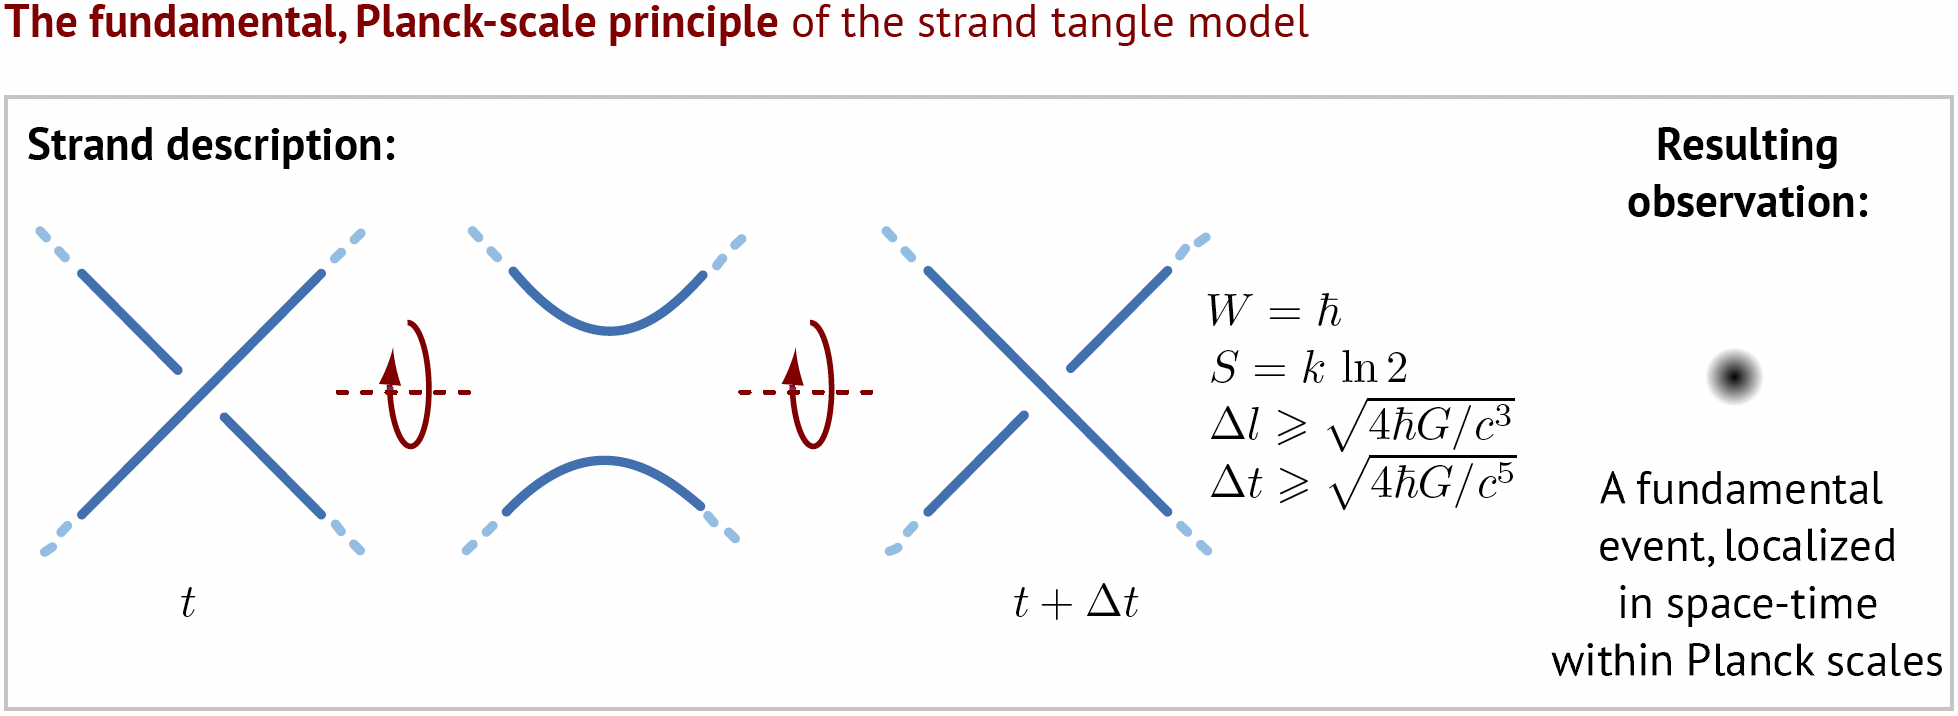 The fundamental principle of the strand
tangle model